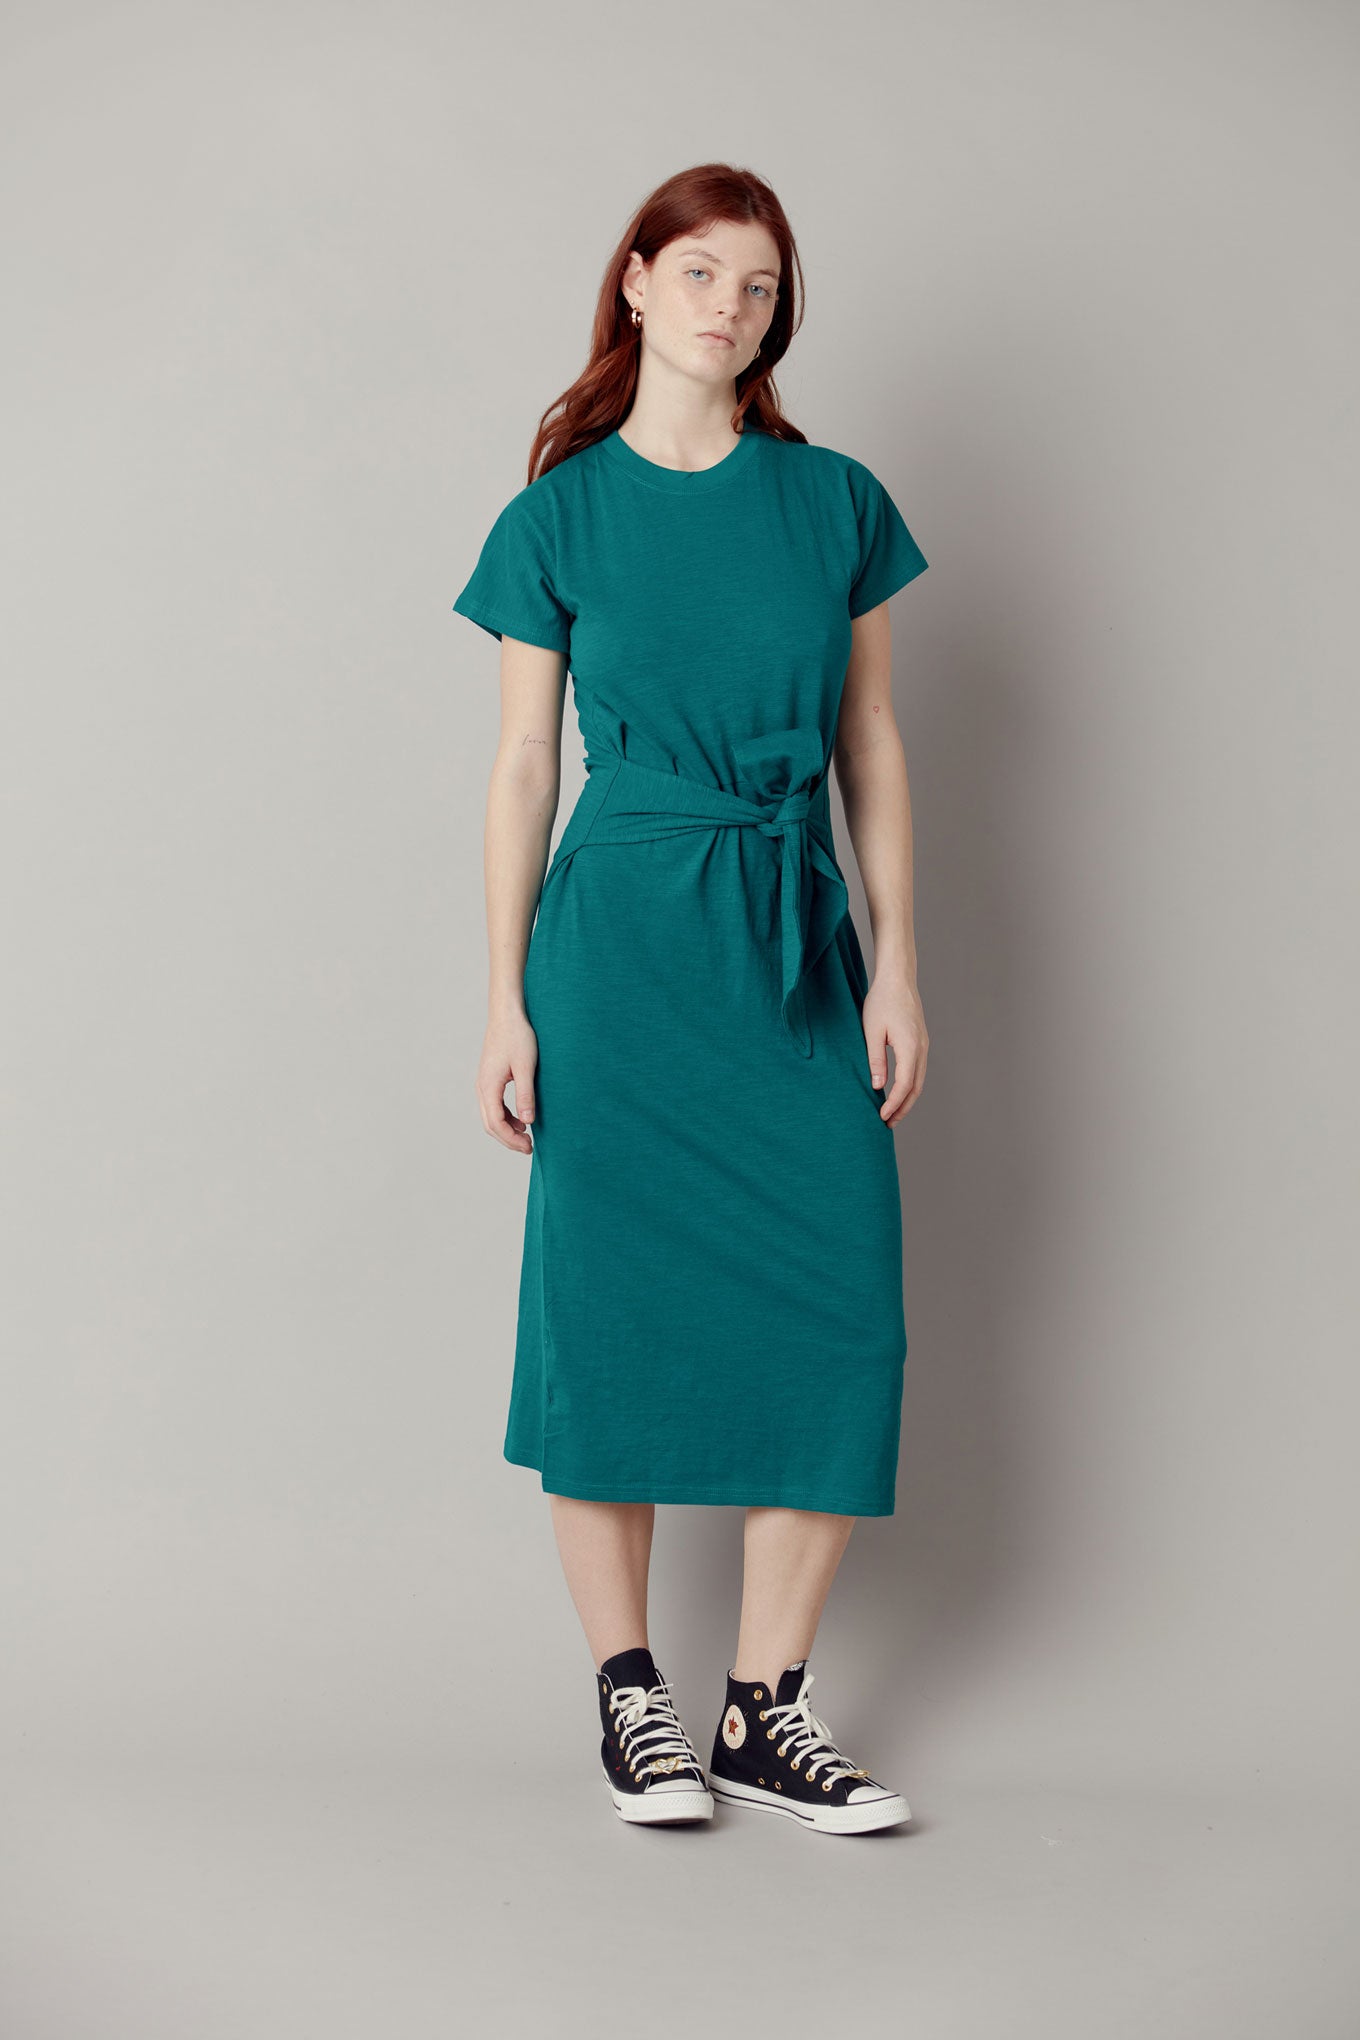 FONDA GOTS Organic Cotton Dress - Teal Green, SIZE 4 / UK 14 / EUR 42